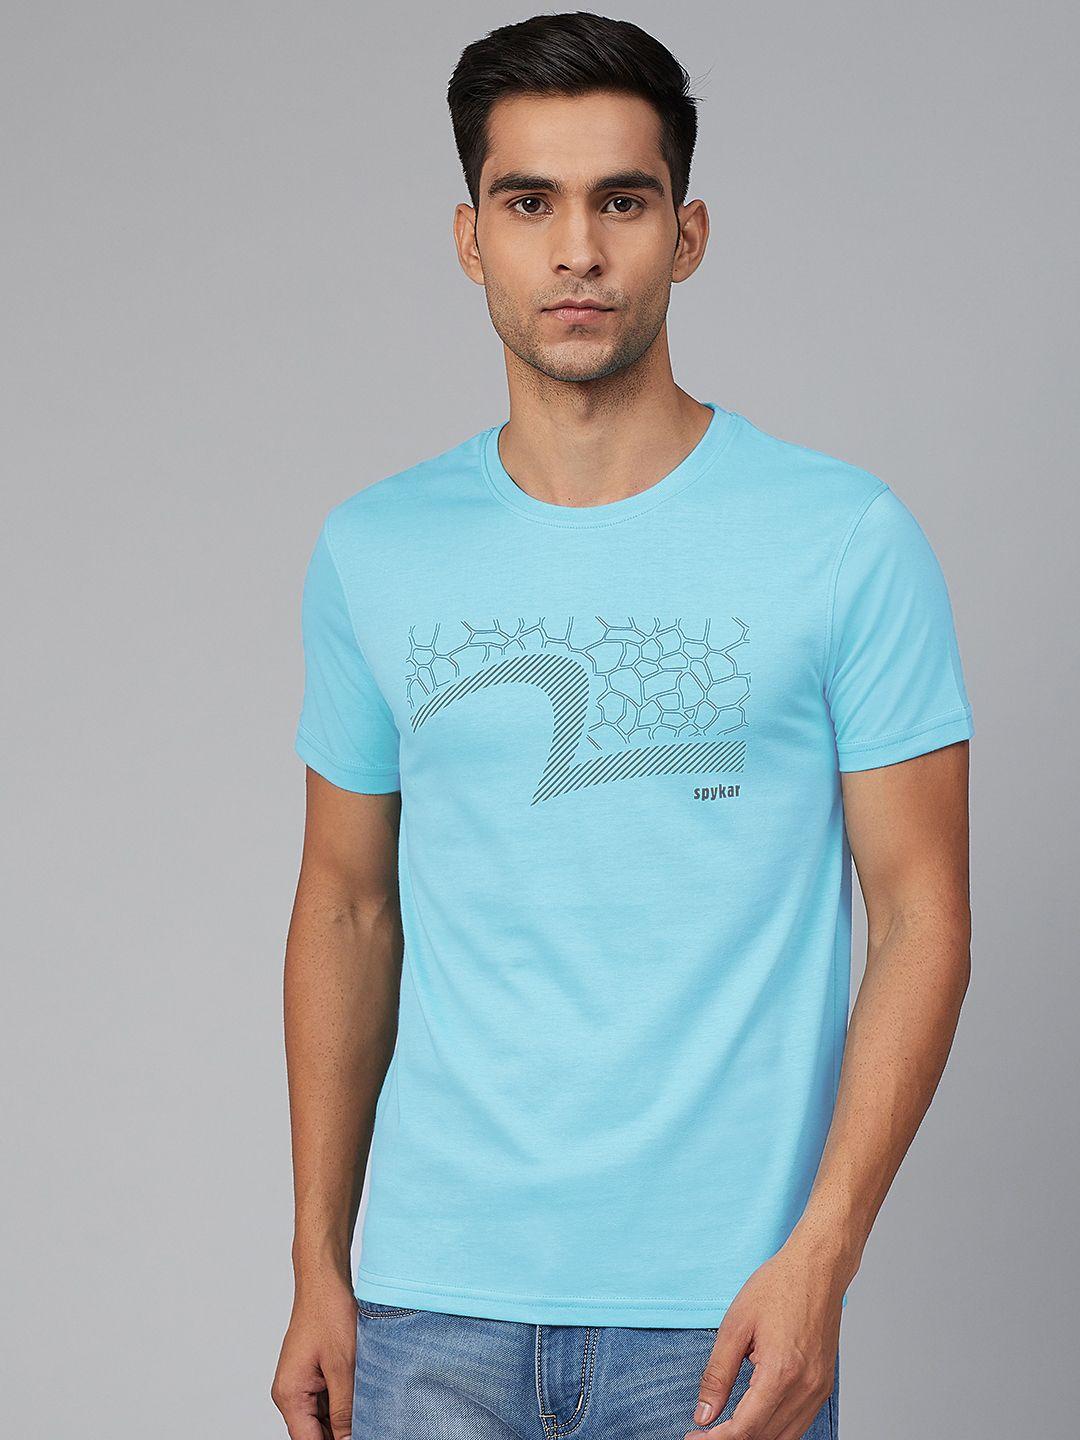 underjeans-by-spykar-men-blue-printed-round-neck-t-shirt